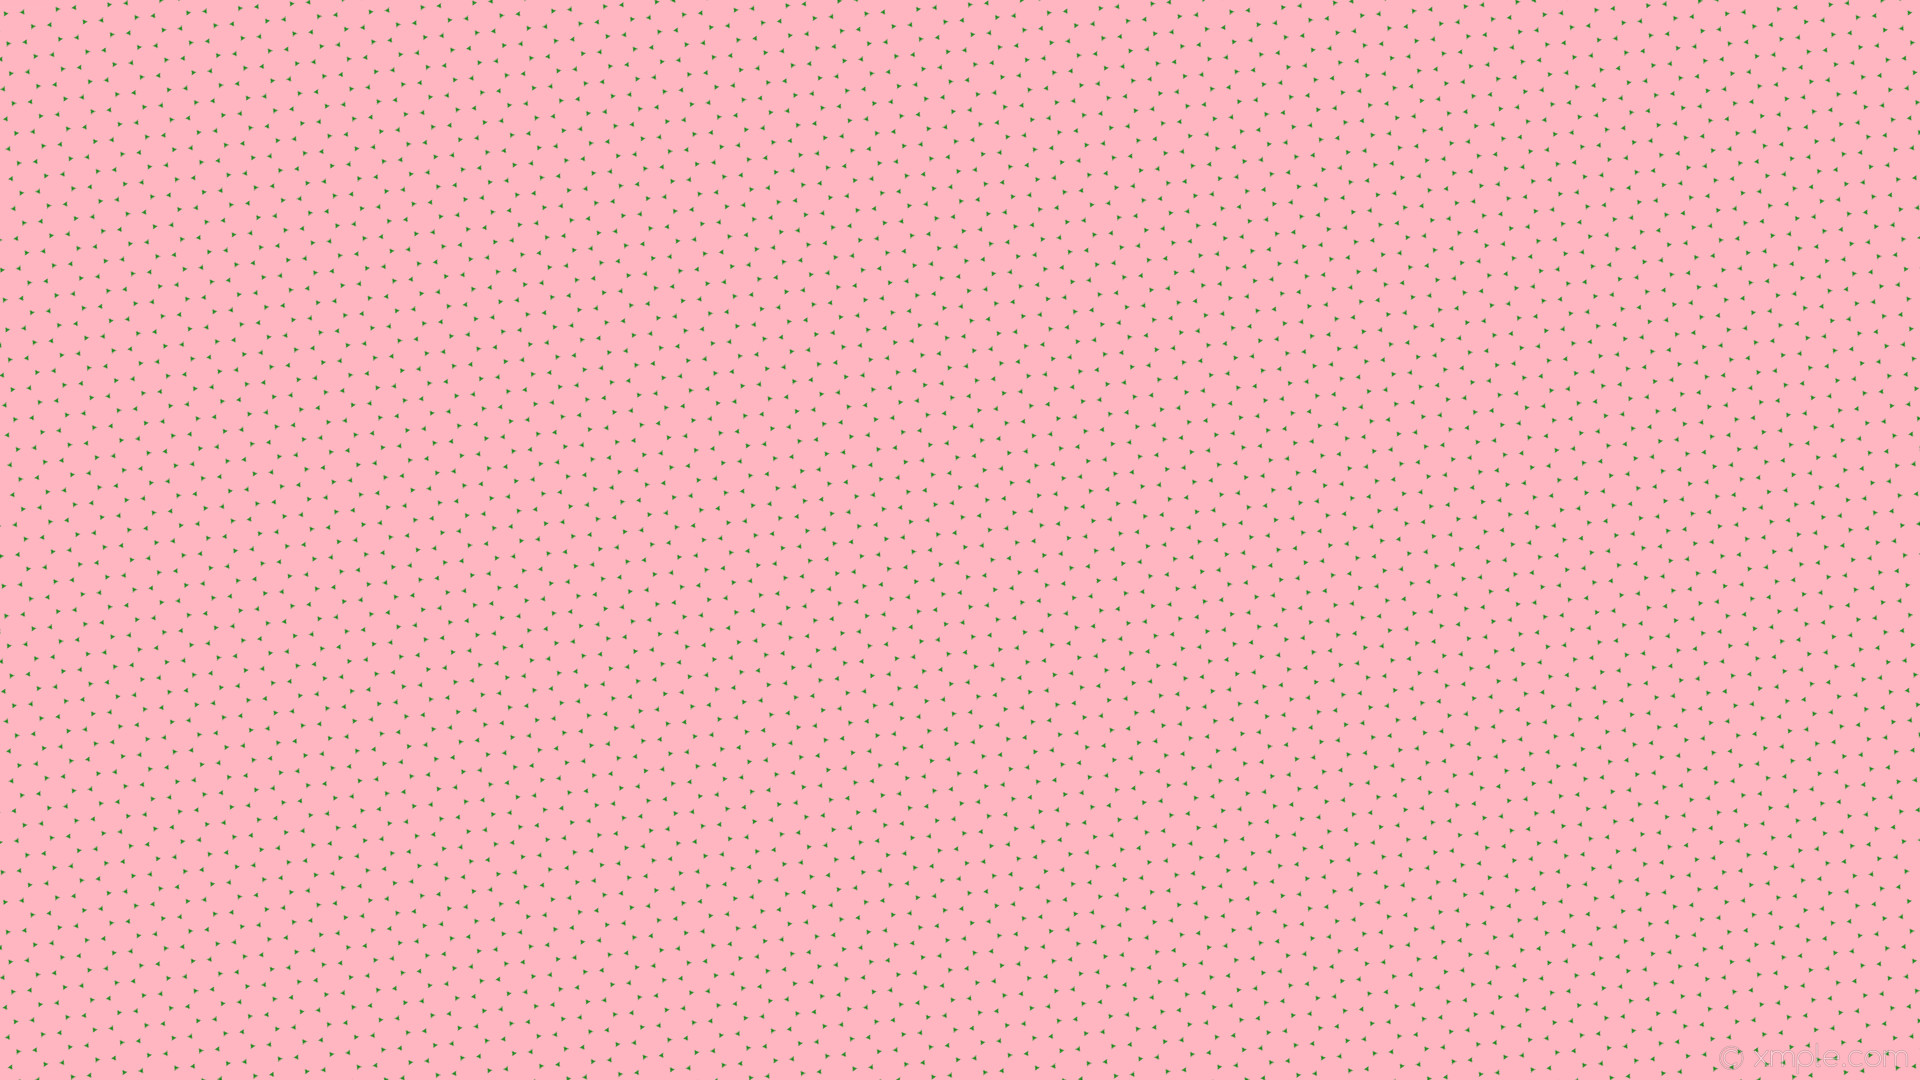 1920x1080 wallpaper dots green hexagon polka pink forest green light pink #228b22  #ffb6c1 diagonal 35